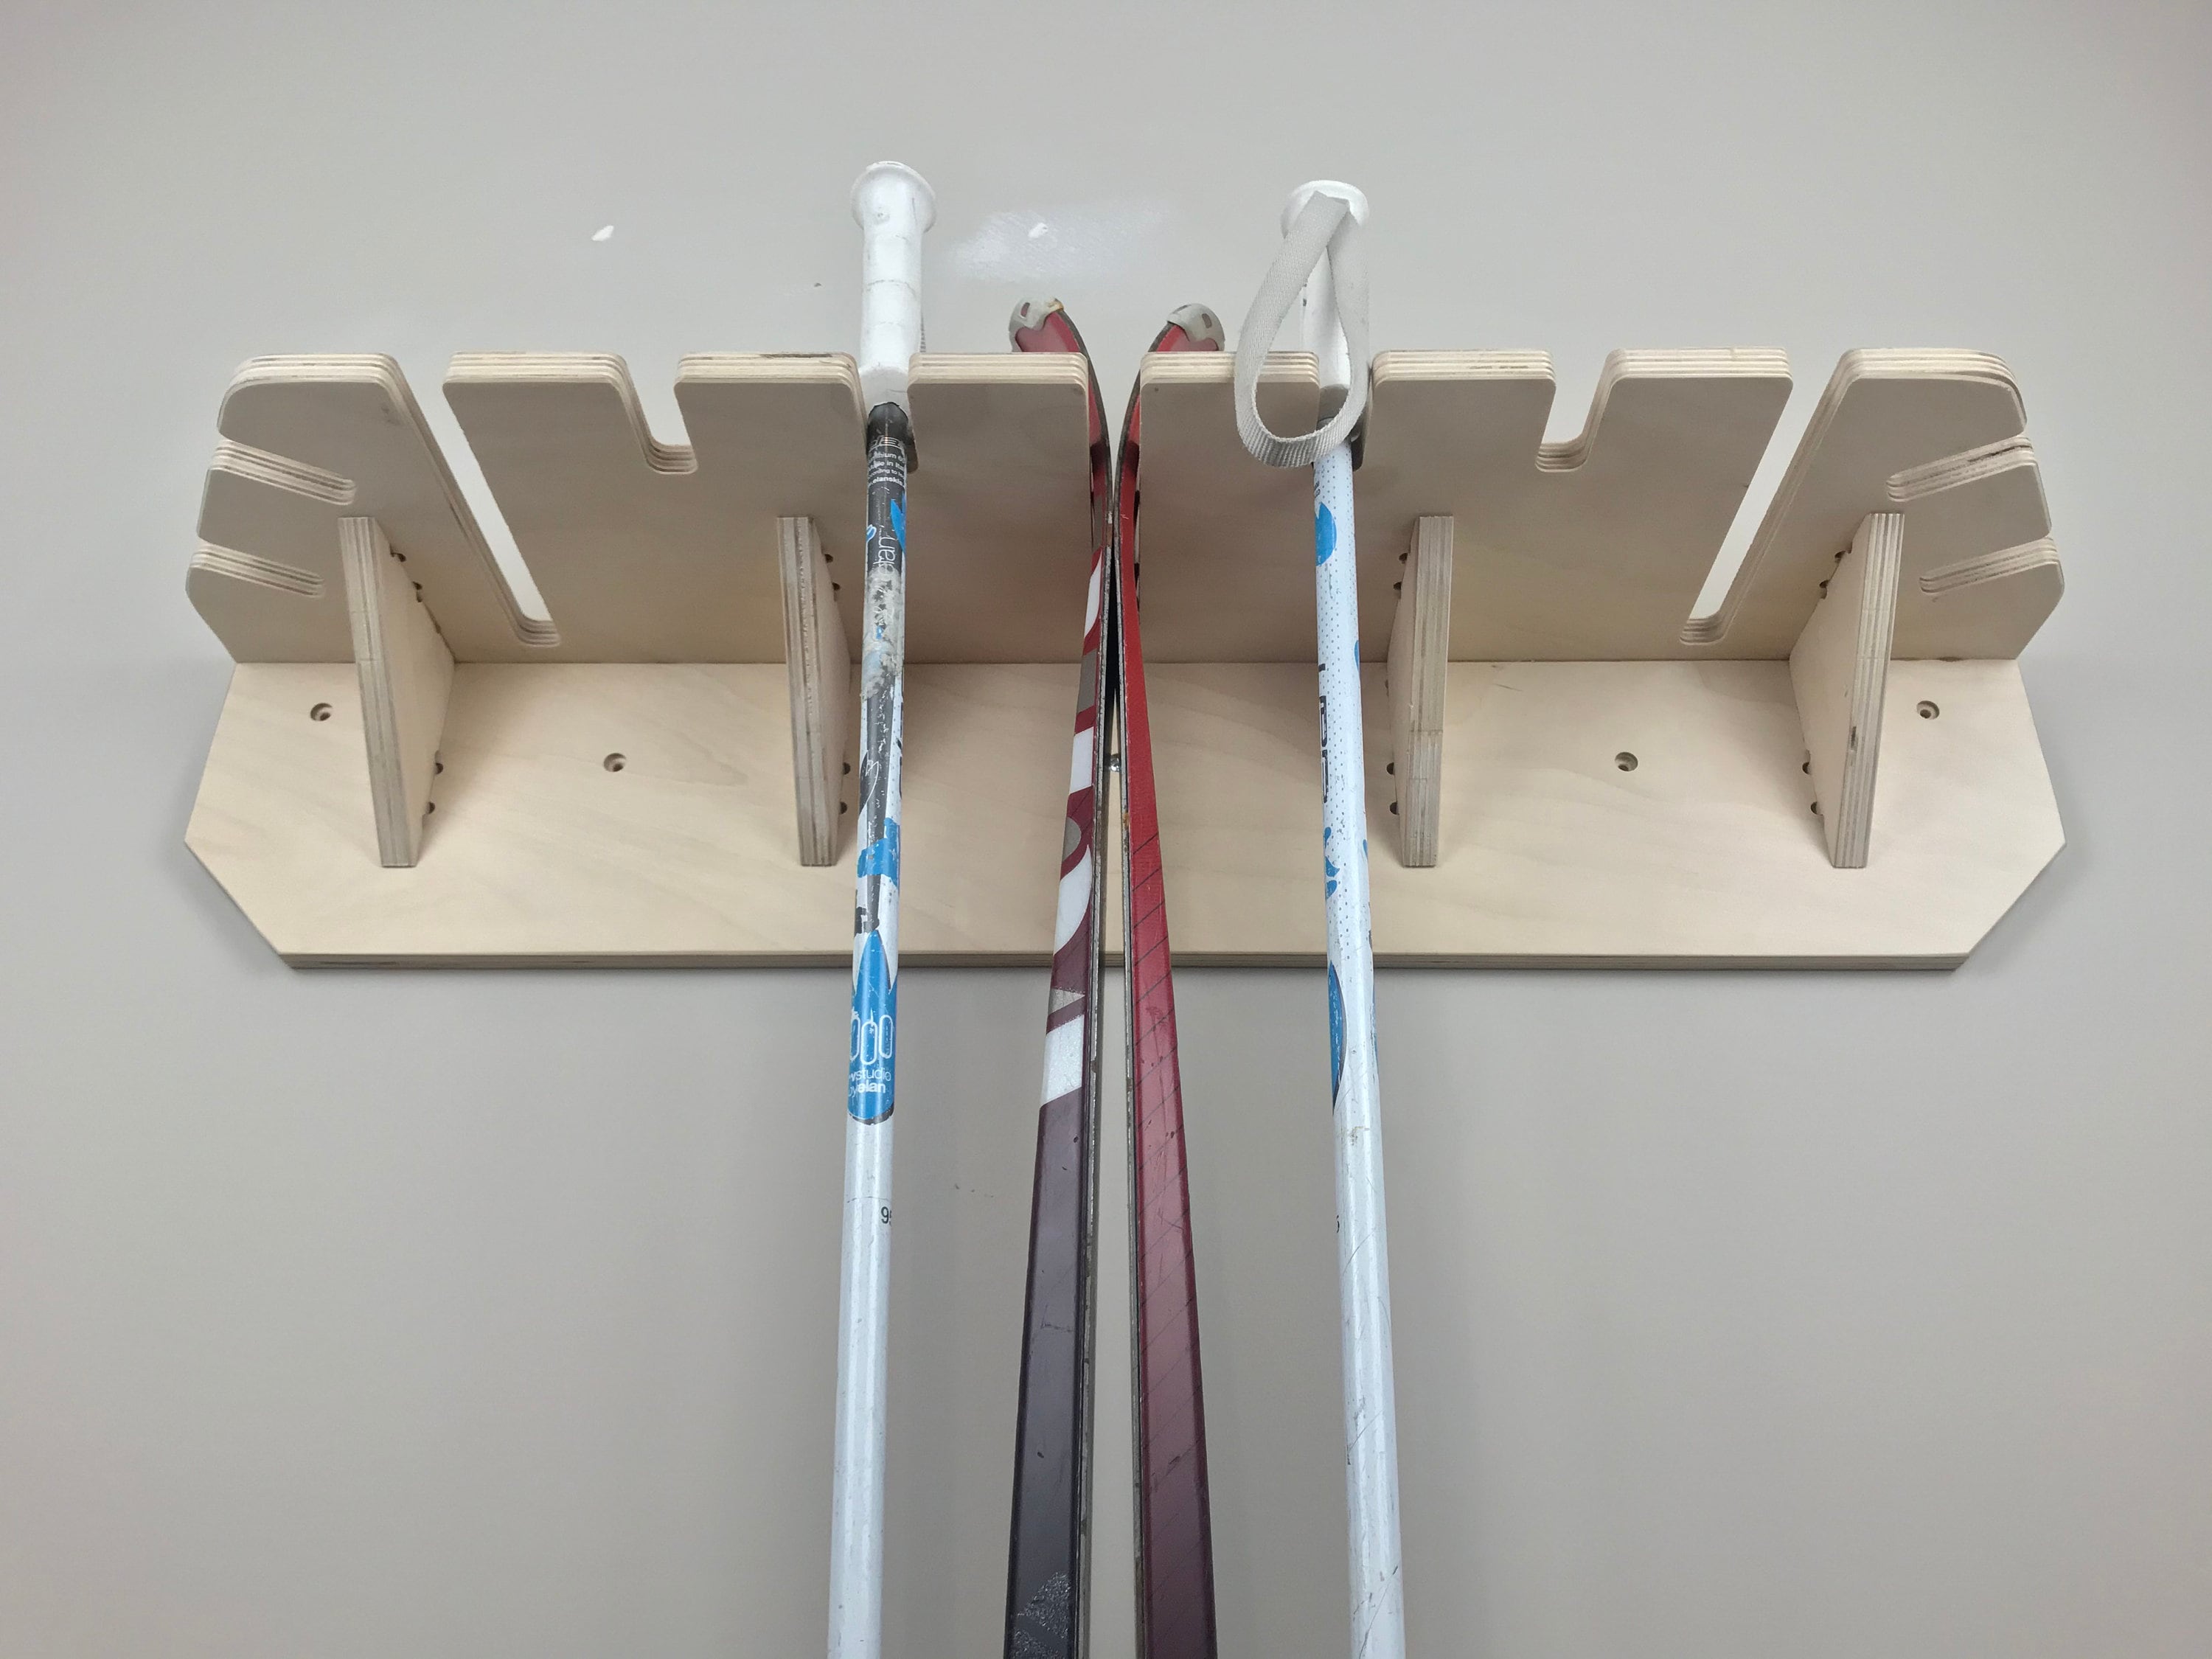 Holzhermann – Support pour skis modèle « Holzhermann », en bois de